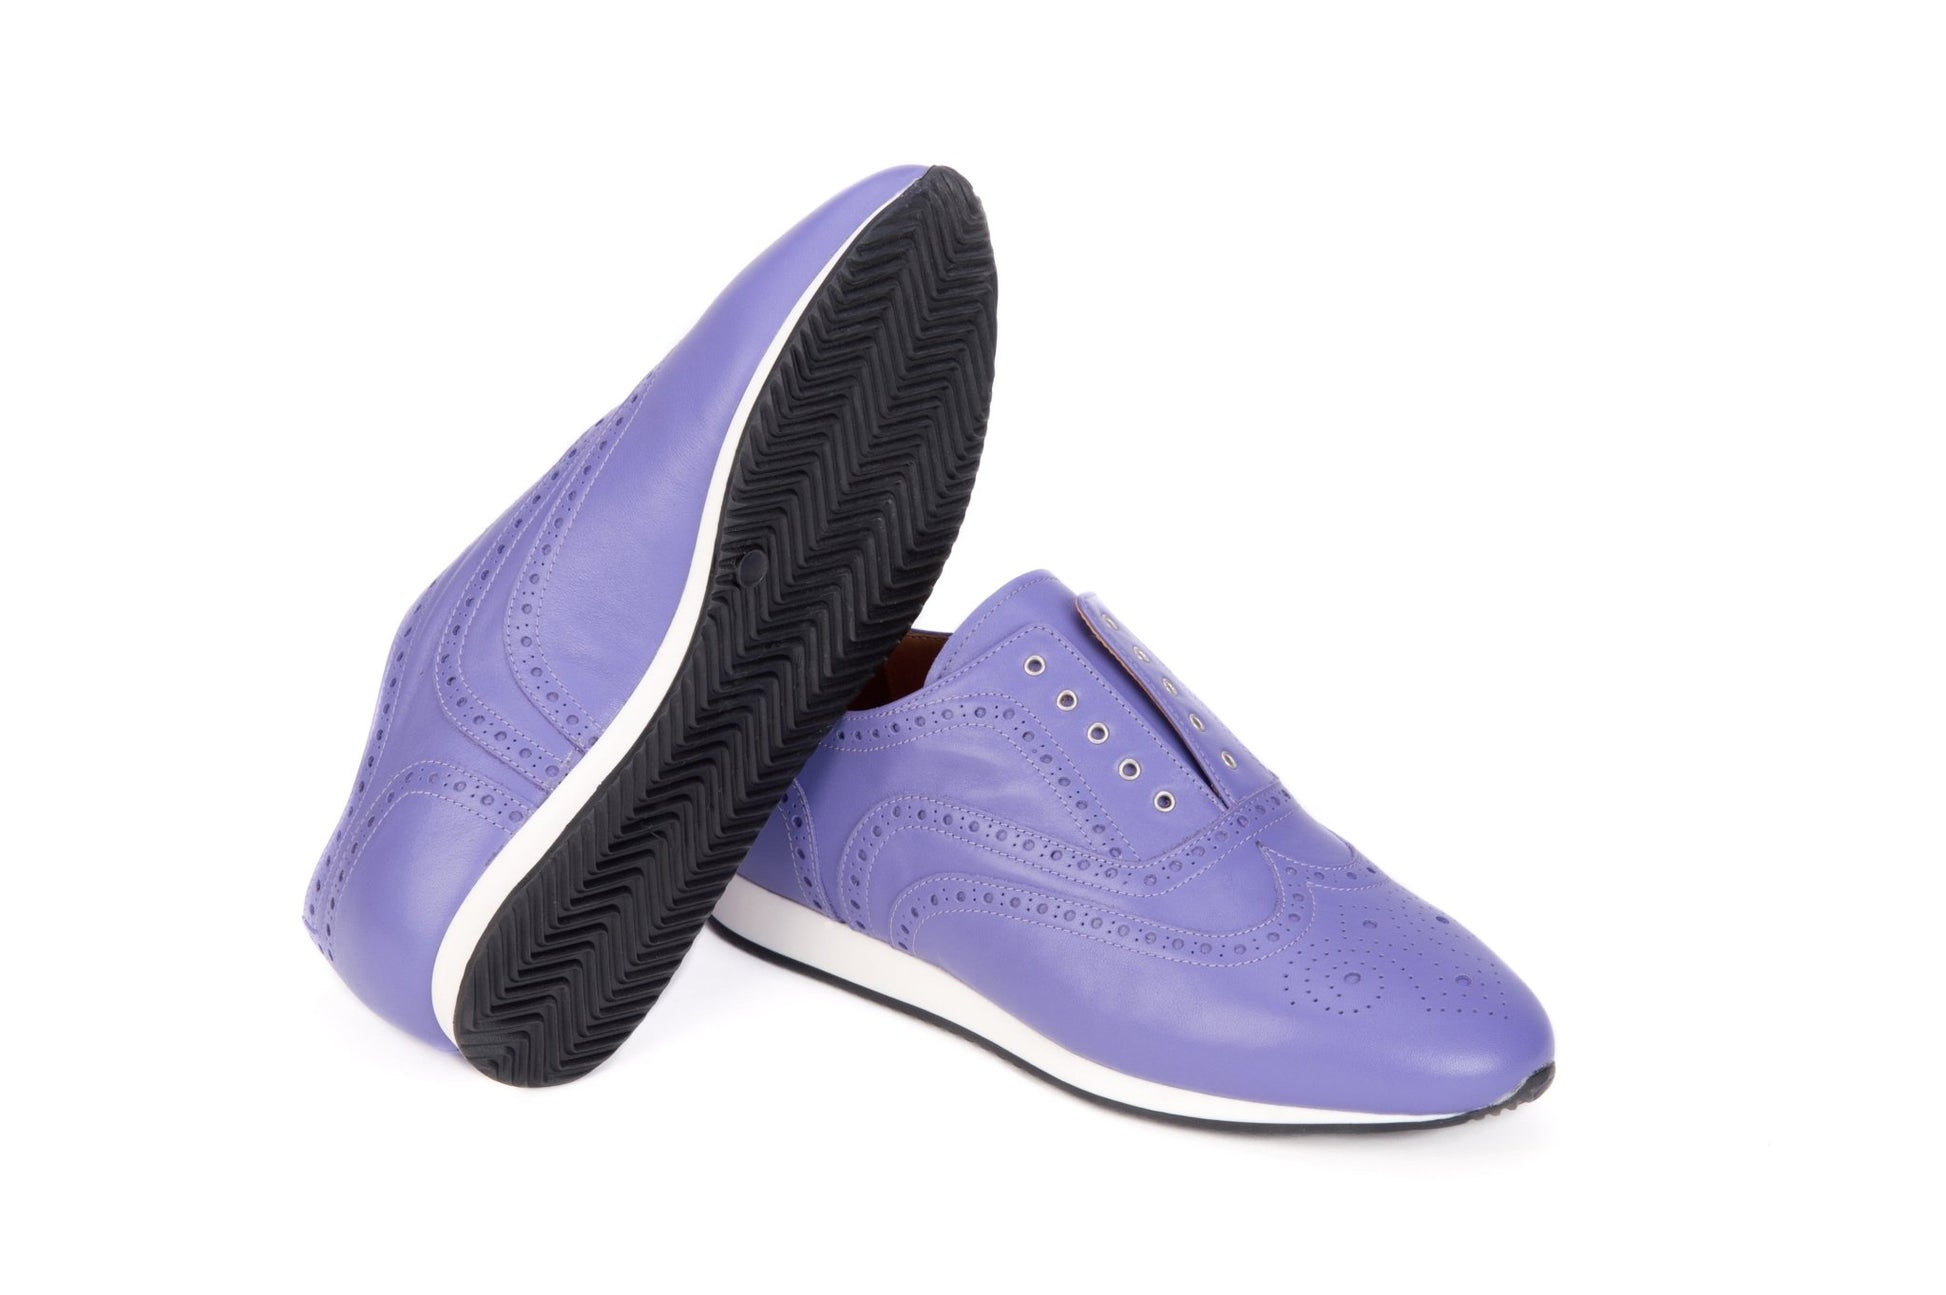 Pisani - Sneaker elegante | violet - SteloItaly